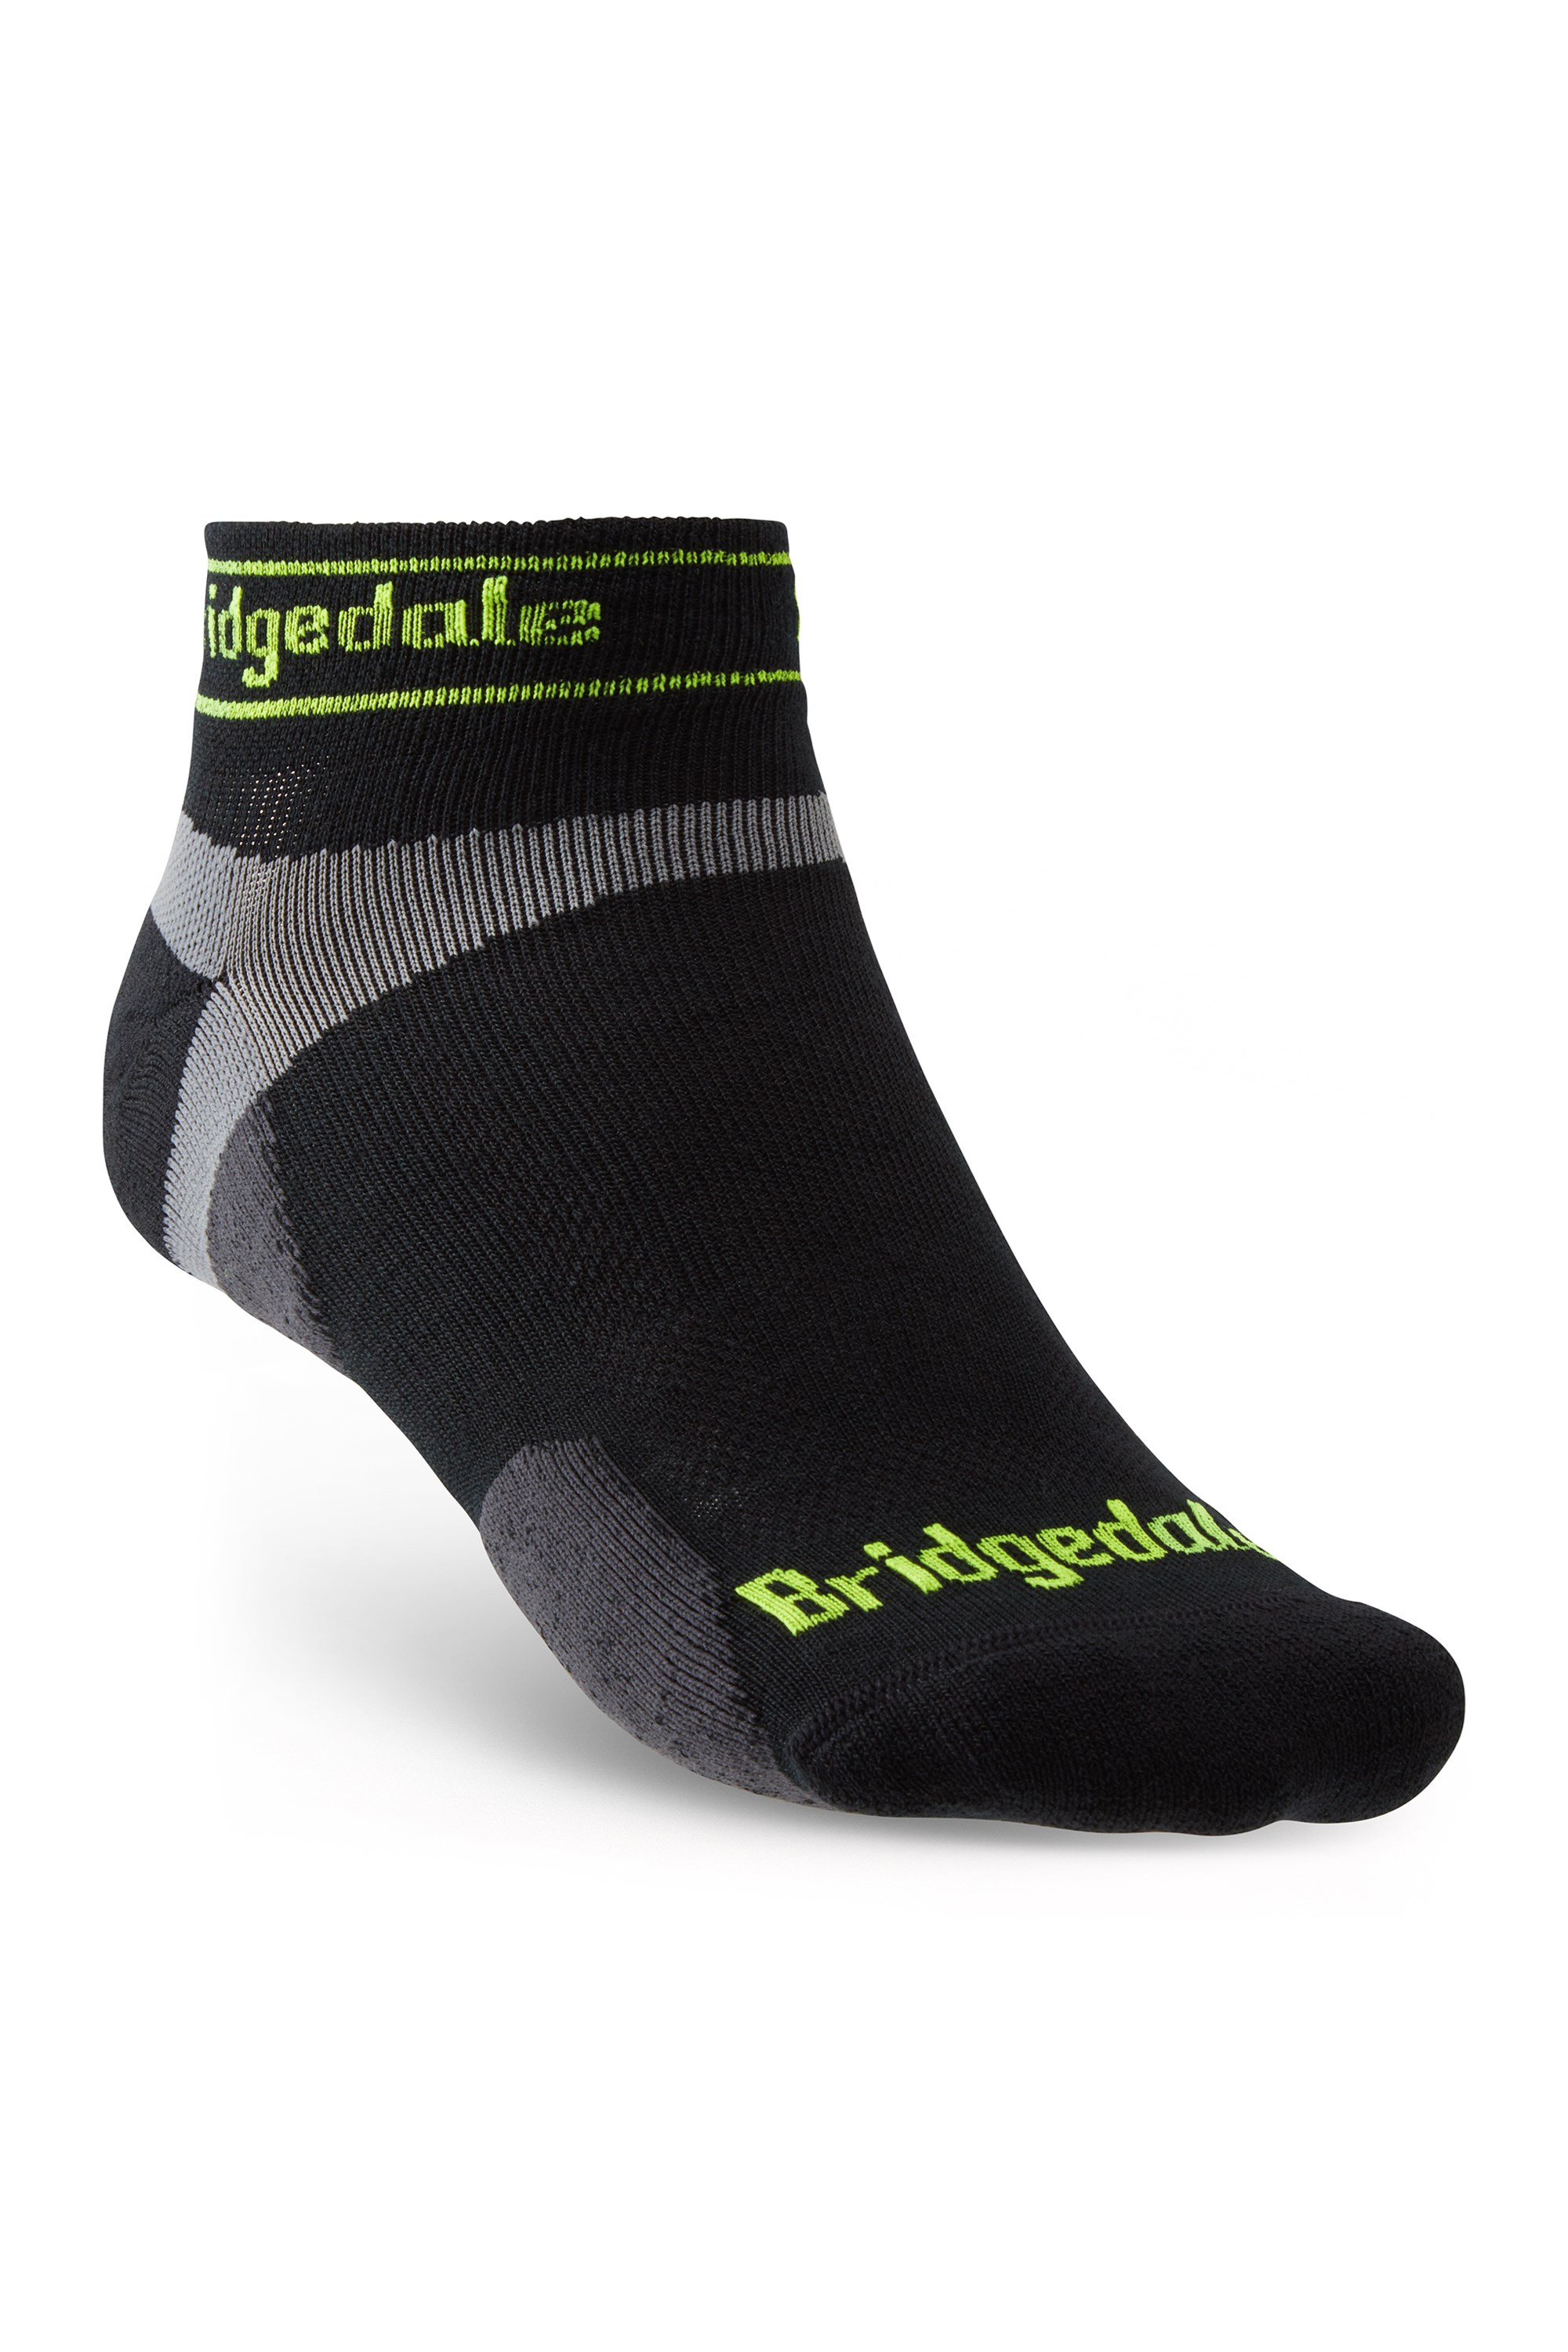 Bridgedale Mens Lightweight Low Merino Sock - Black